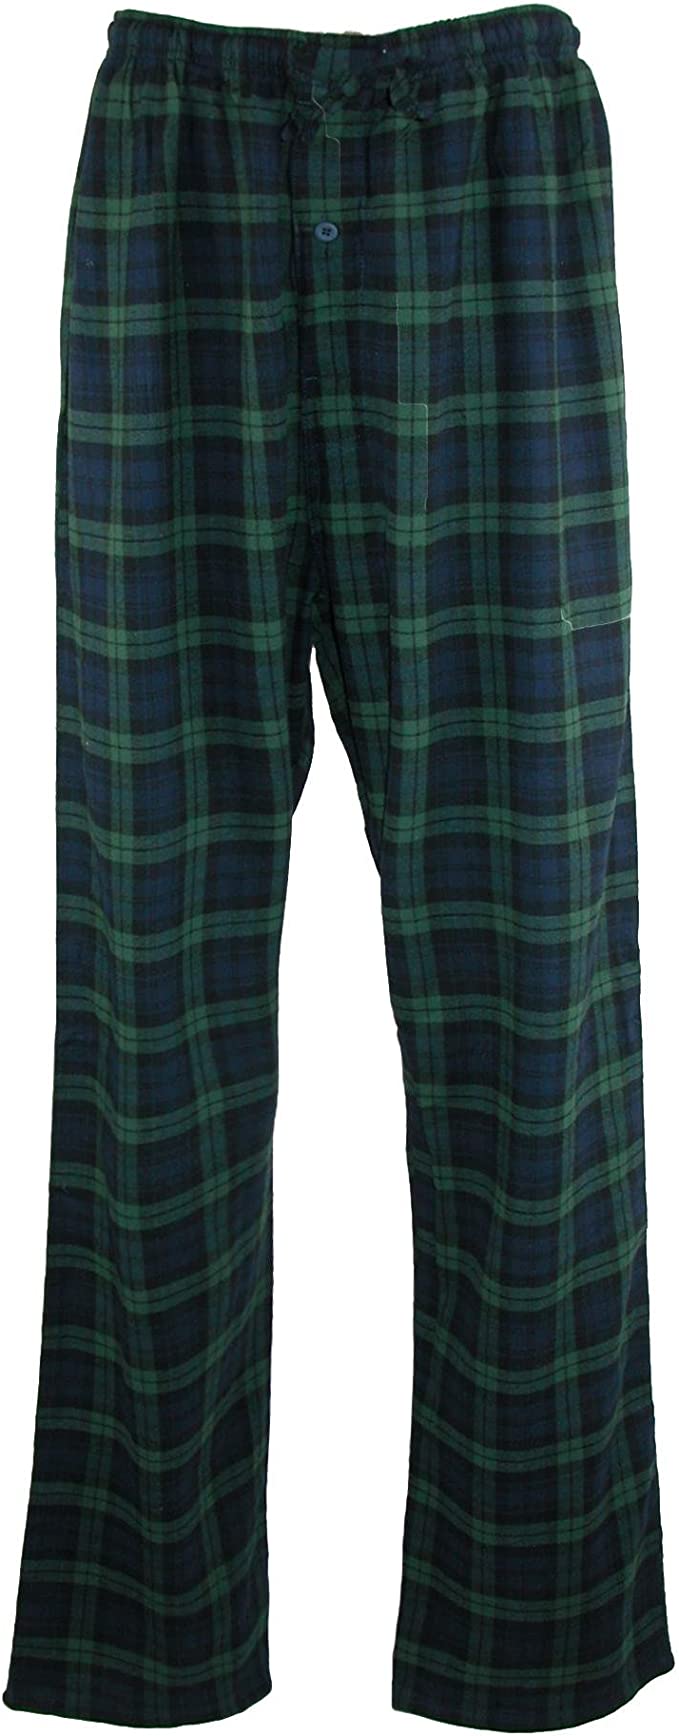 Hanes Men's Cotton Flannel Pajama Set